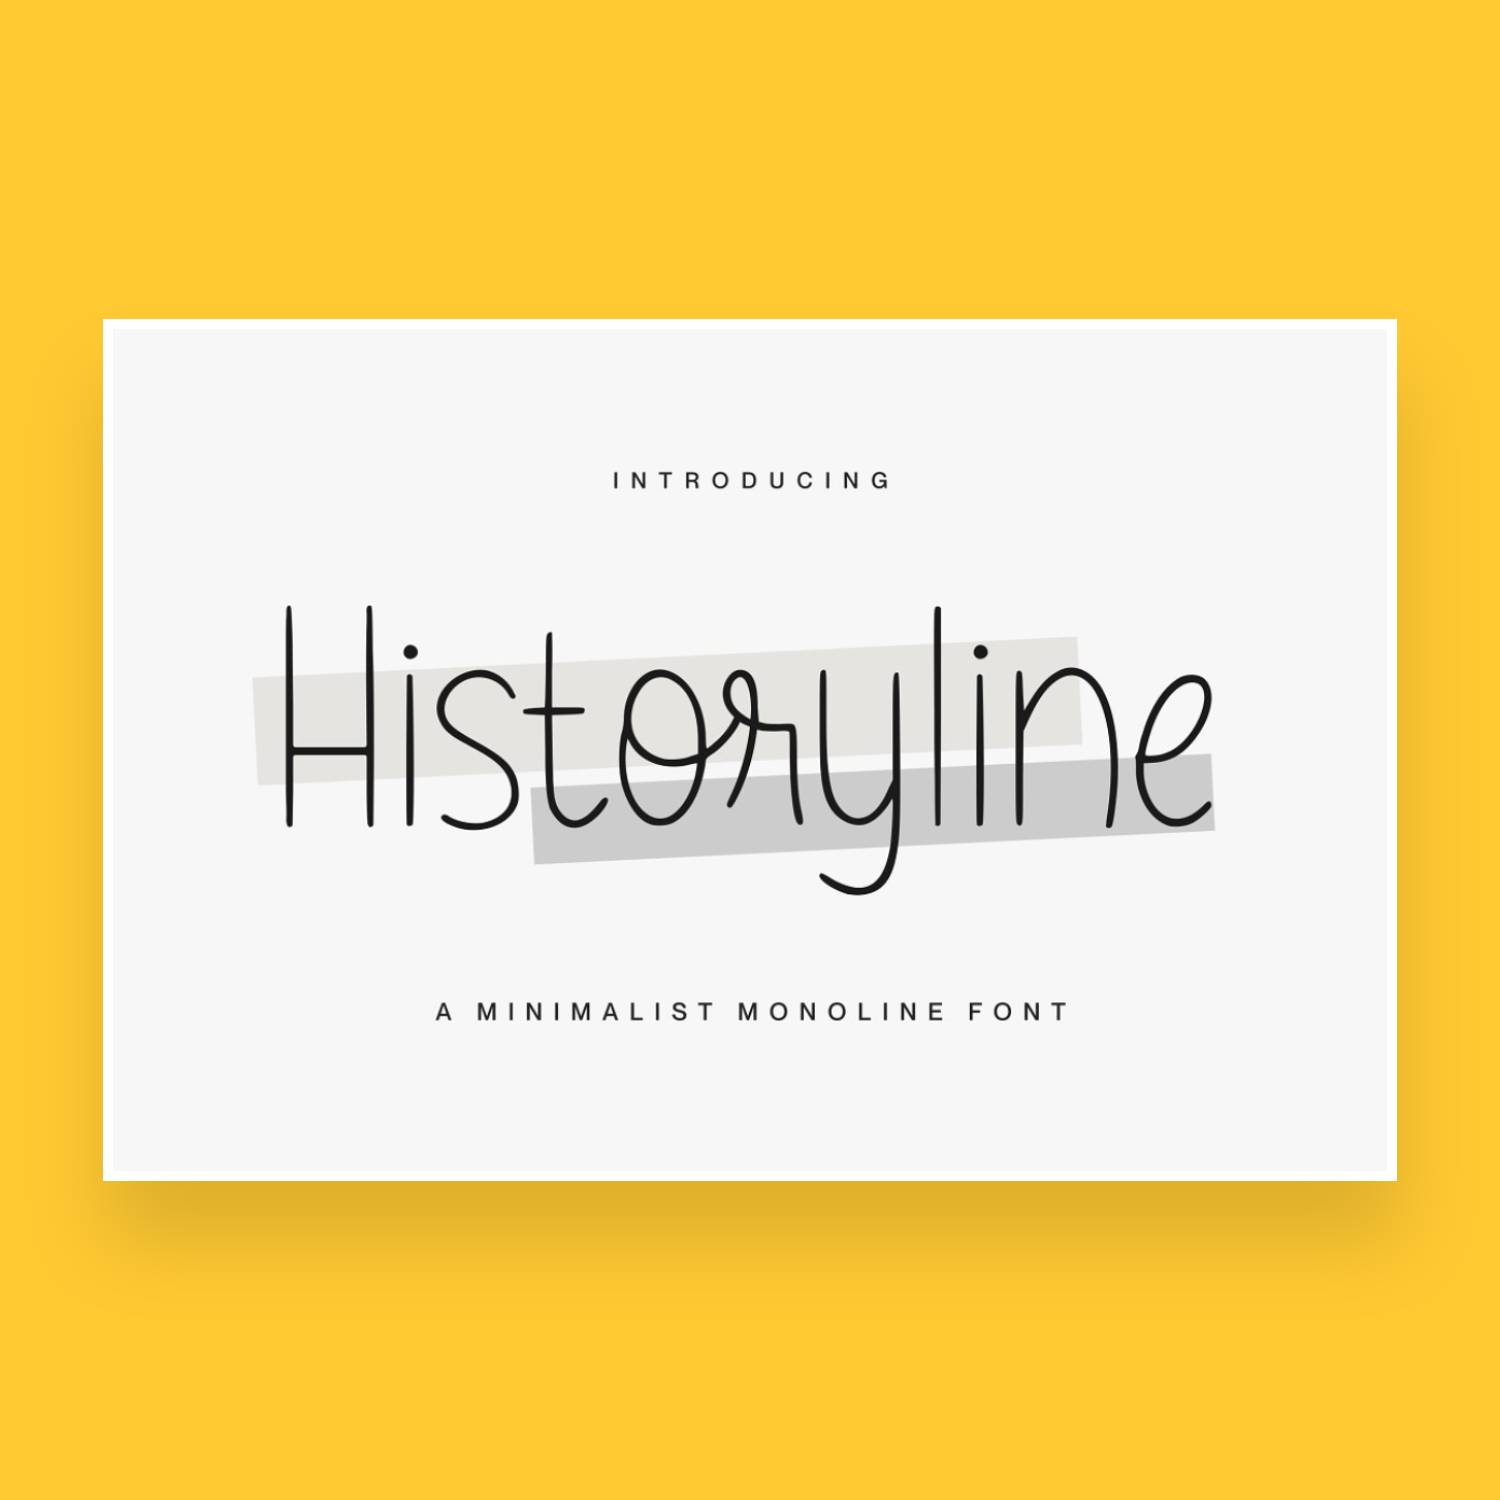 Historyline minimalist monoline font main cover.